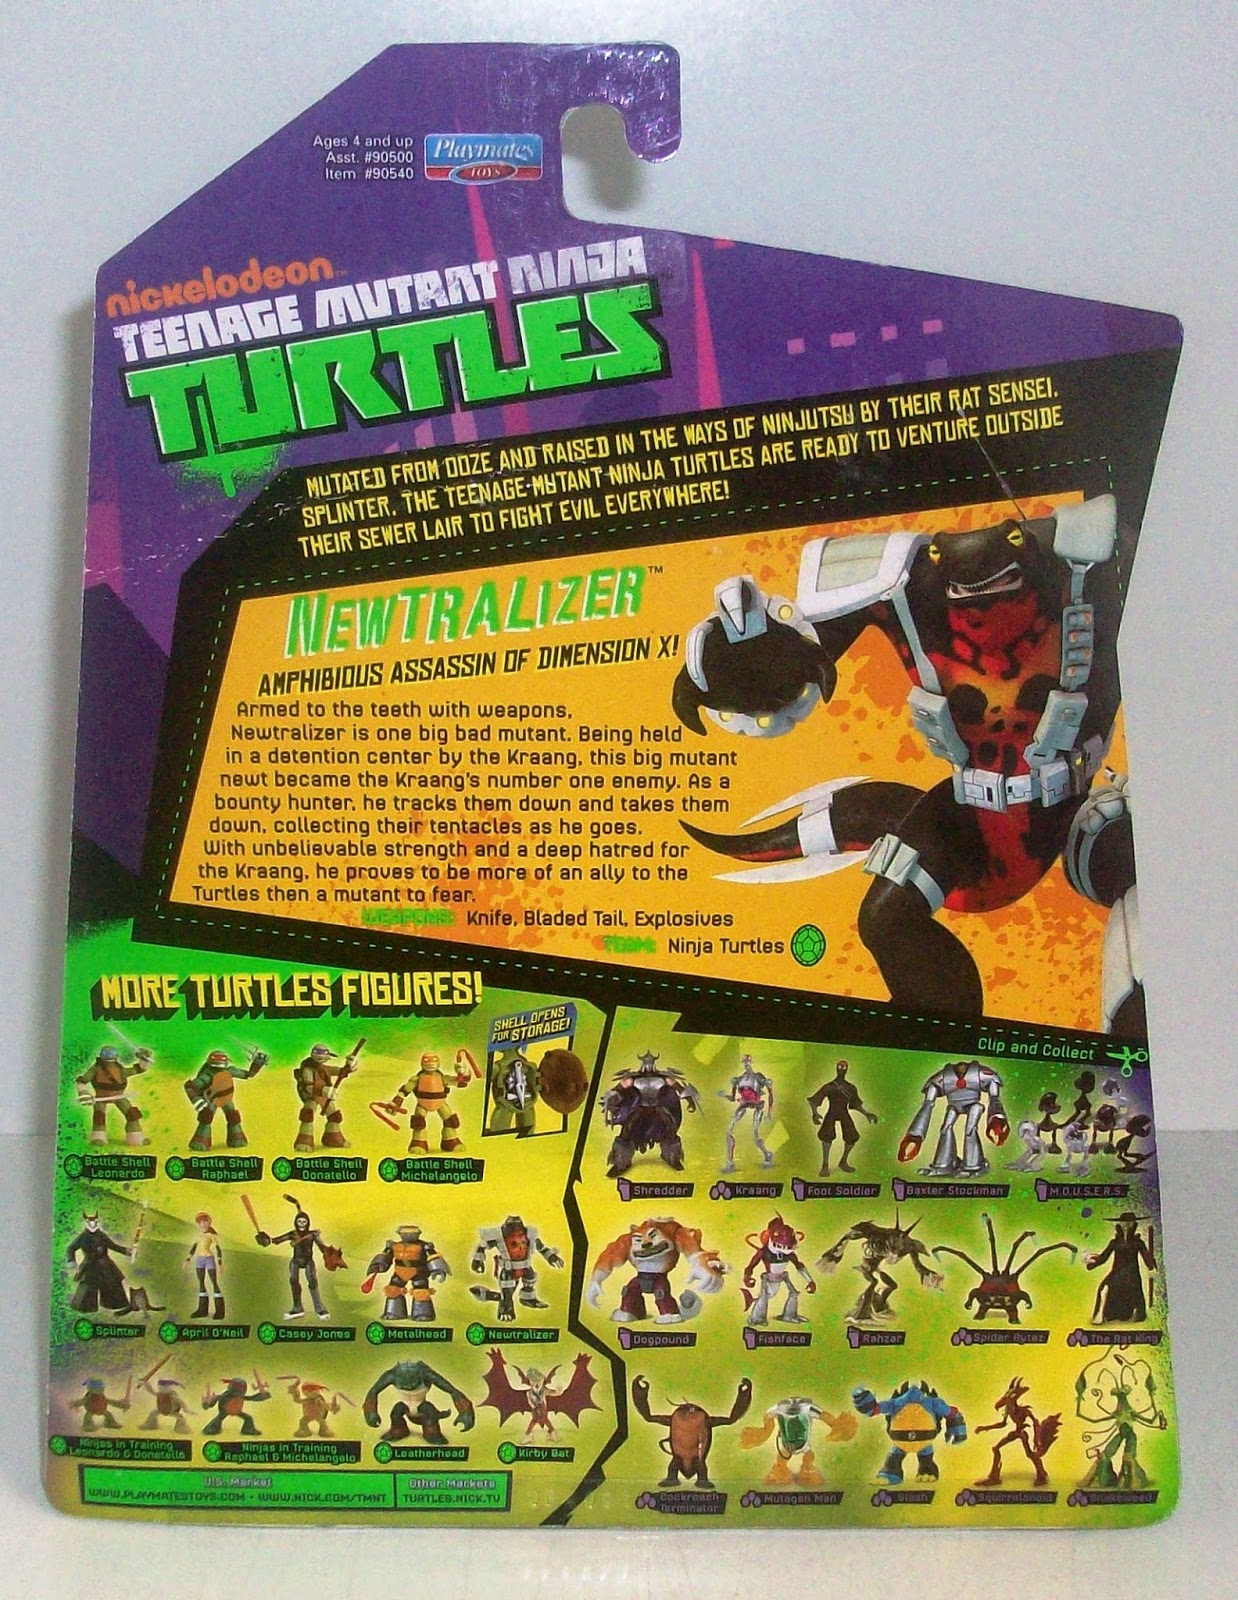 Random Toy Reviews: Teenage Mutant Ninja Turtles (Nickelodeon): Newtralizer